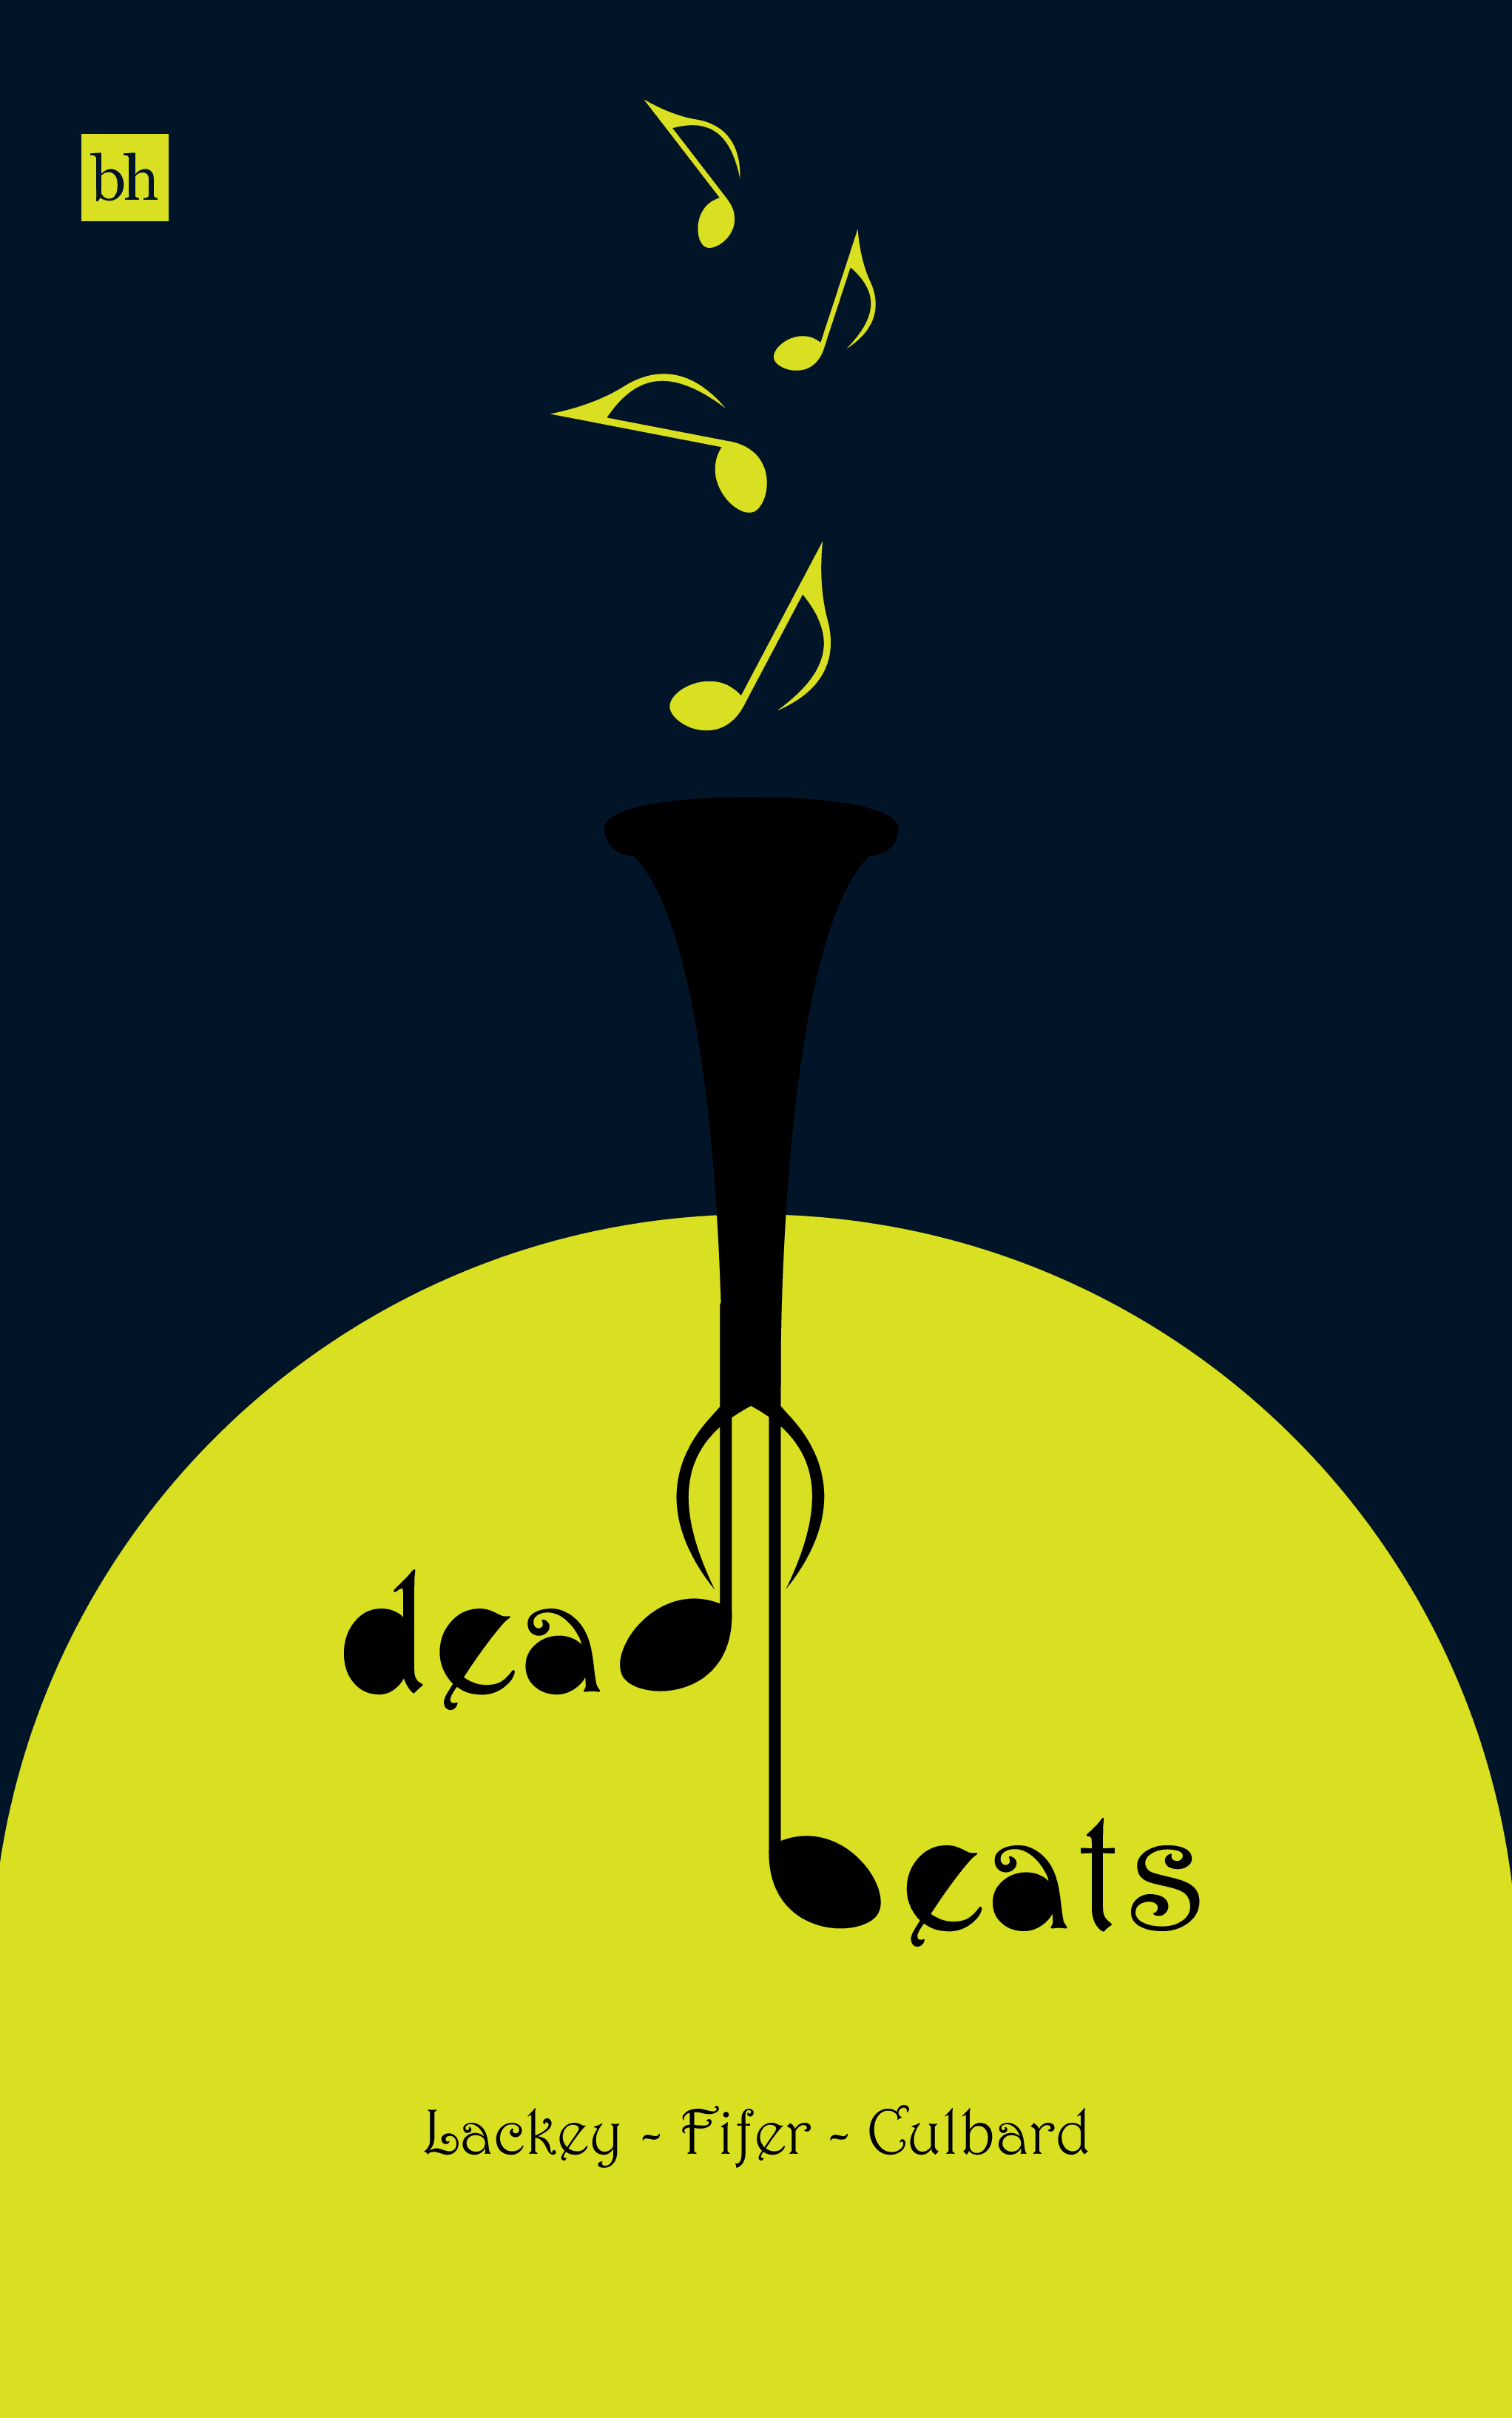 Deadbeats by Chad Fifer and Chris Lackey